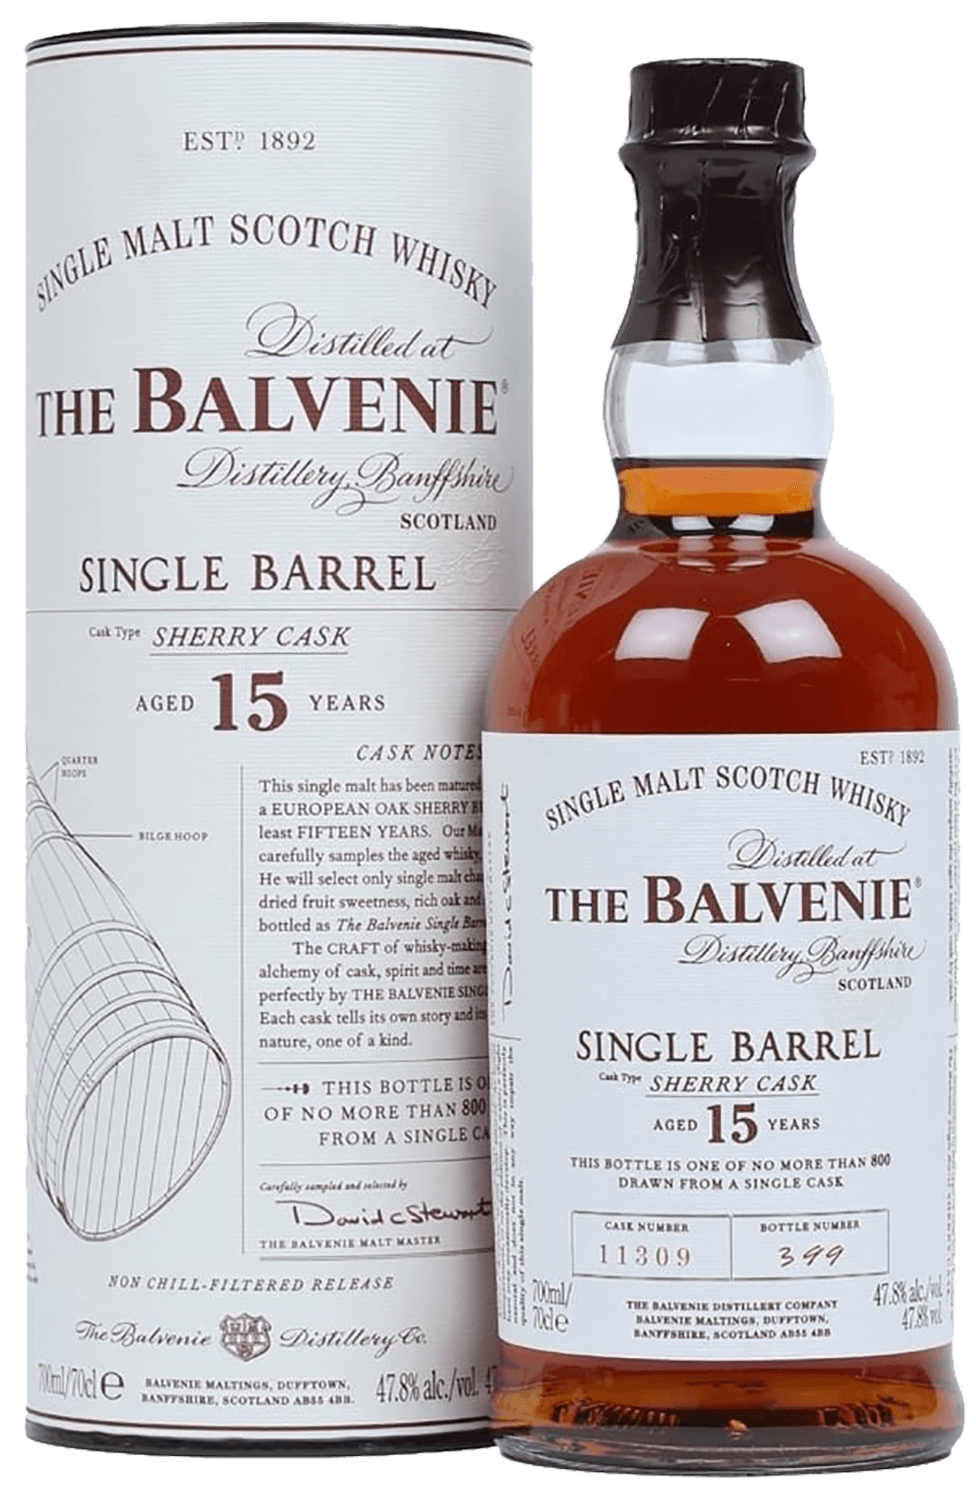 The Balvenie Single Barrel Sherry Cask 15 Years Old Single Malt Scotch Whisky (gift box) koval single barrel bourbon whisky